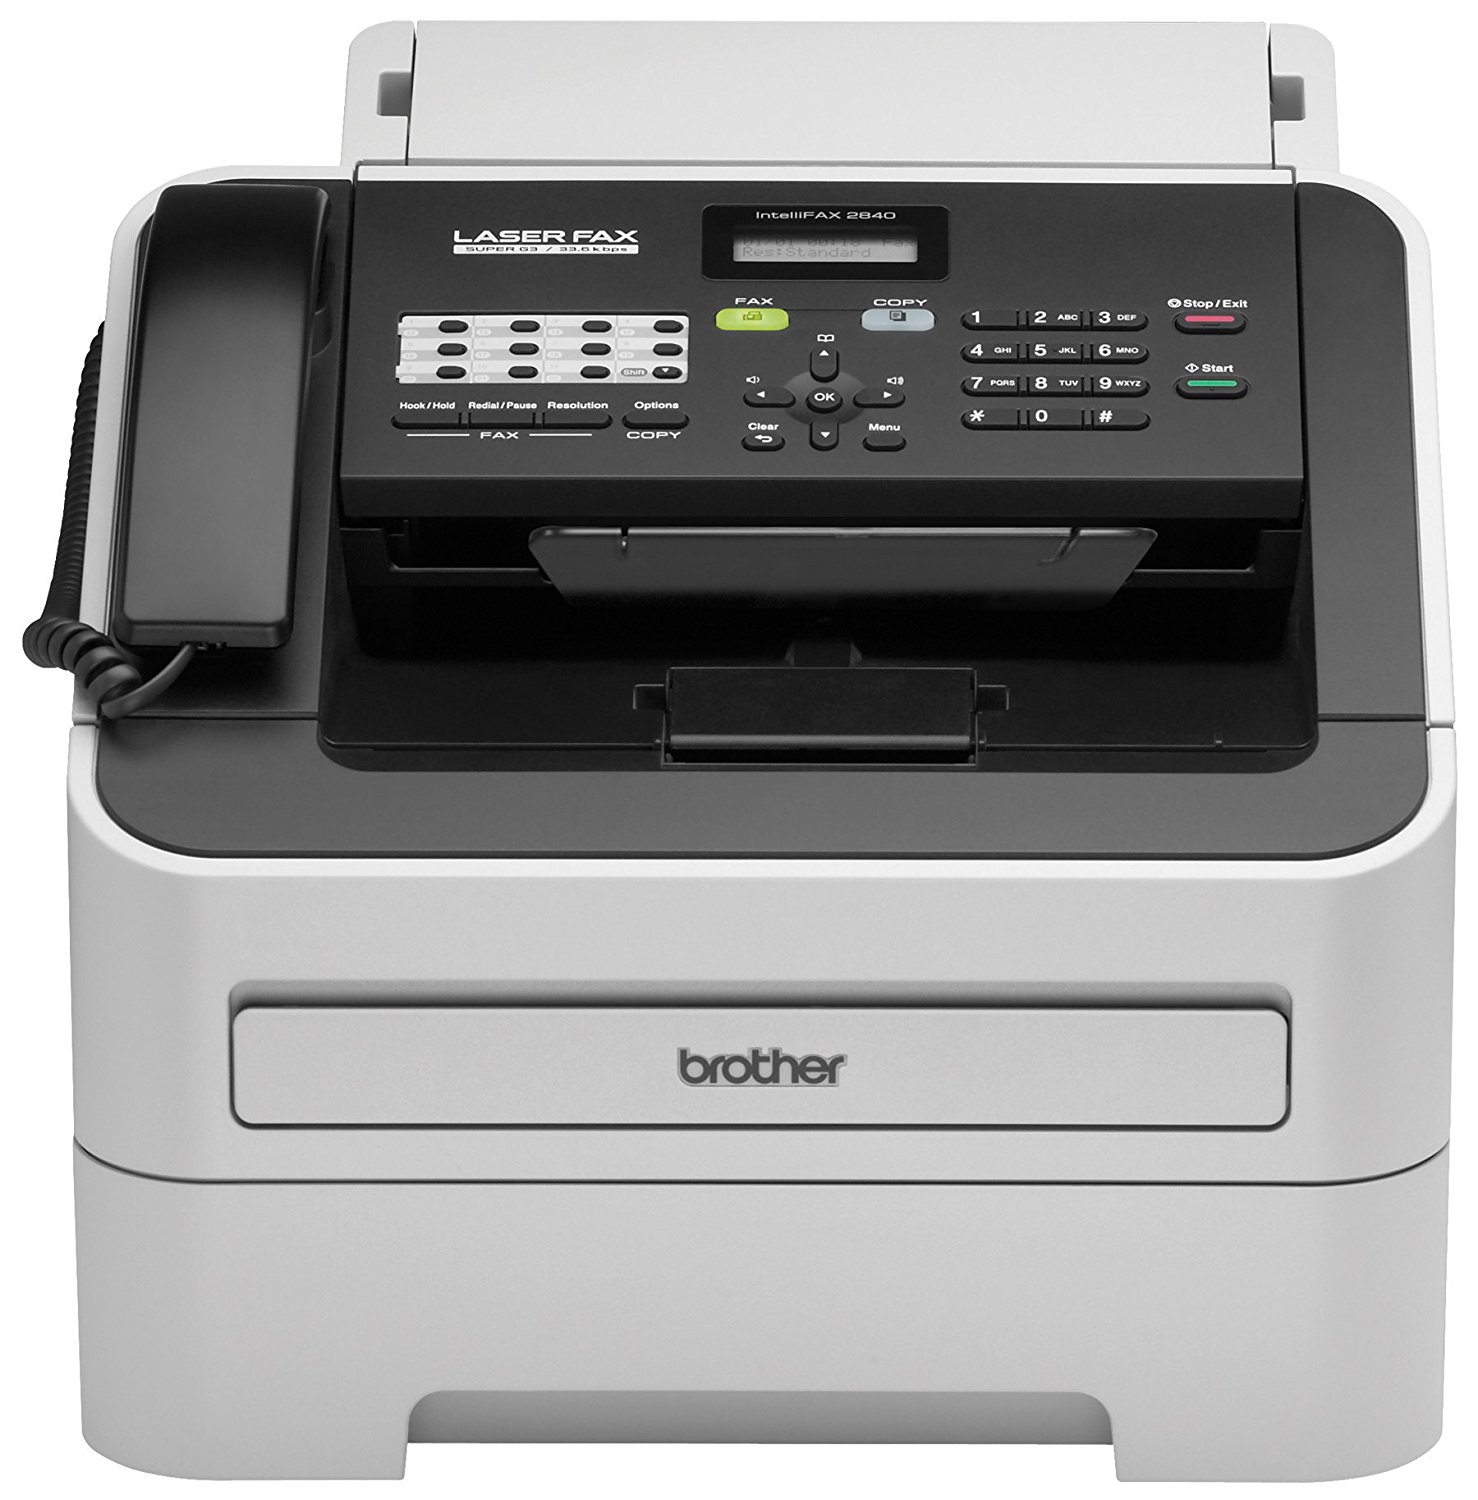 Brother Printer طابعة RFAX2840 لاسلكية أحادية اللون مع ماسح ضوئي وفاكس (مجددة معتمدة)